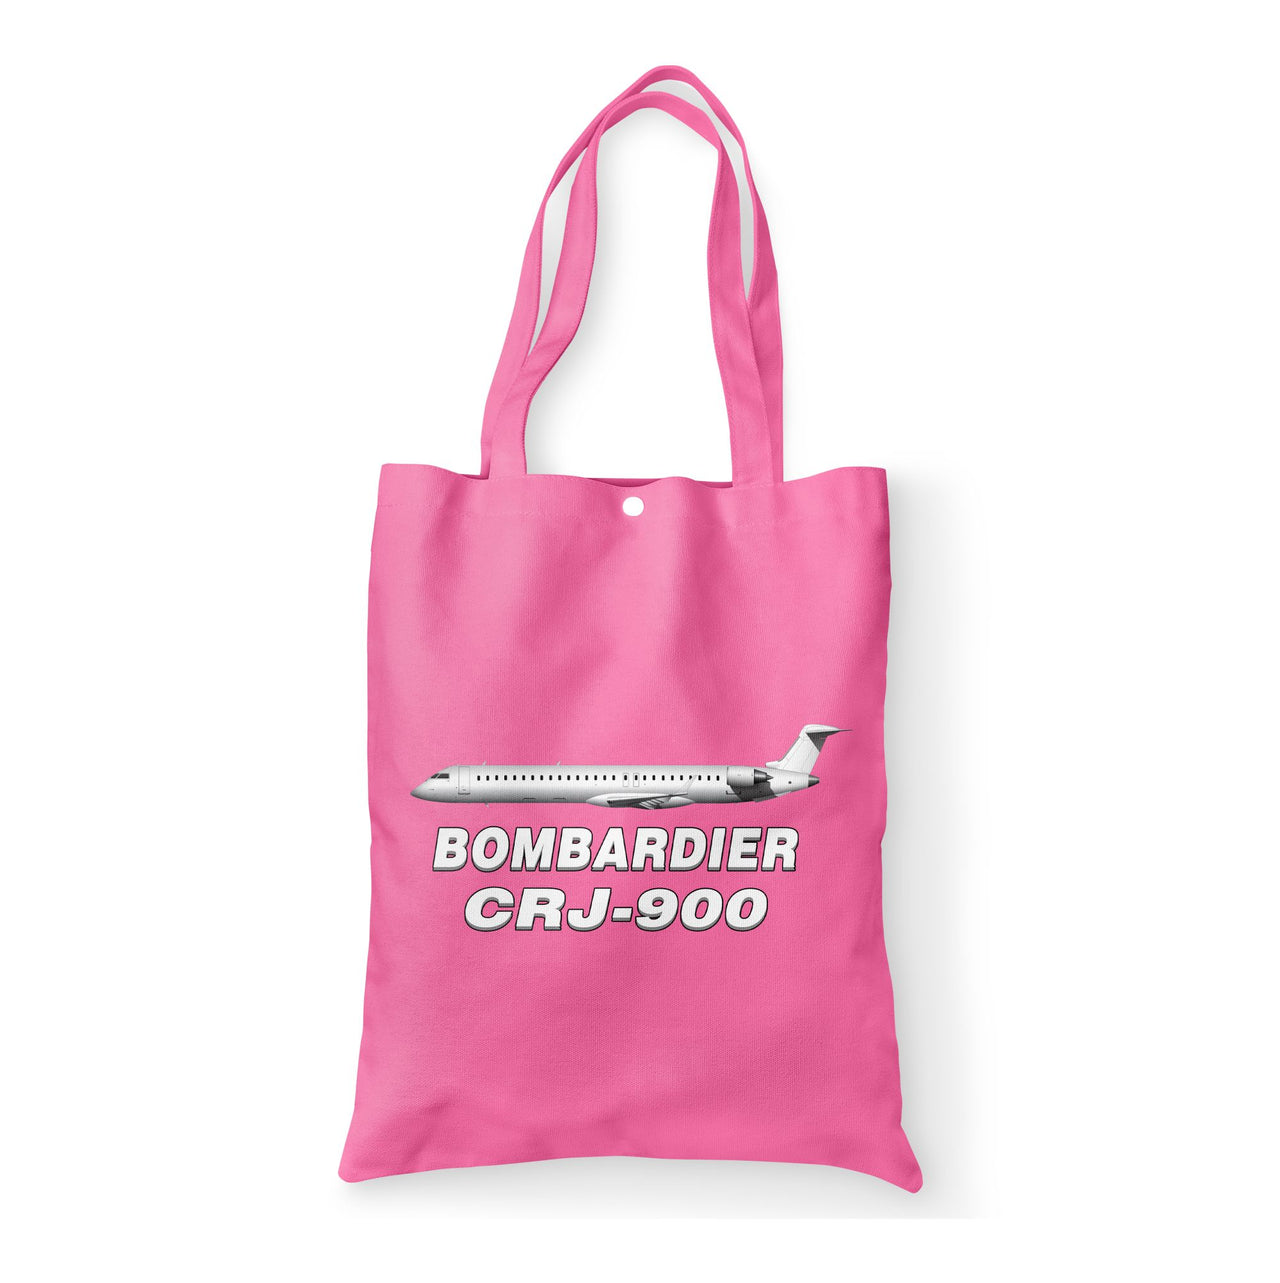 Bombardier CRJ-900 Designed Tote Bags